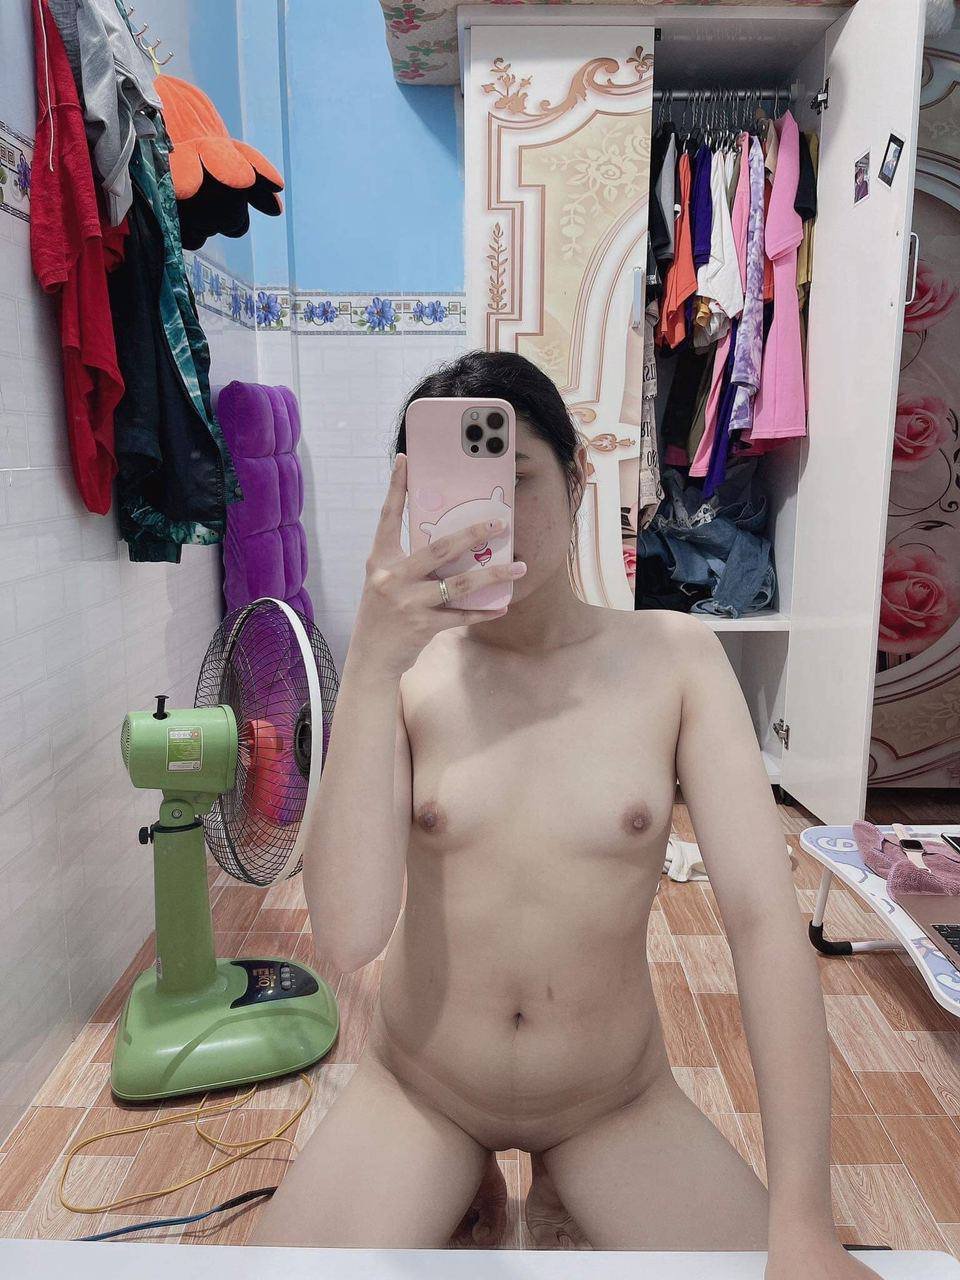 Vietnam Leaked - Selfie in front of mirror